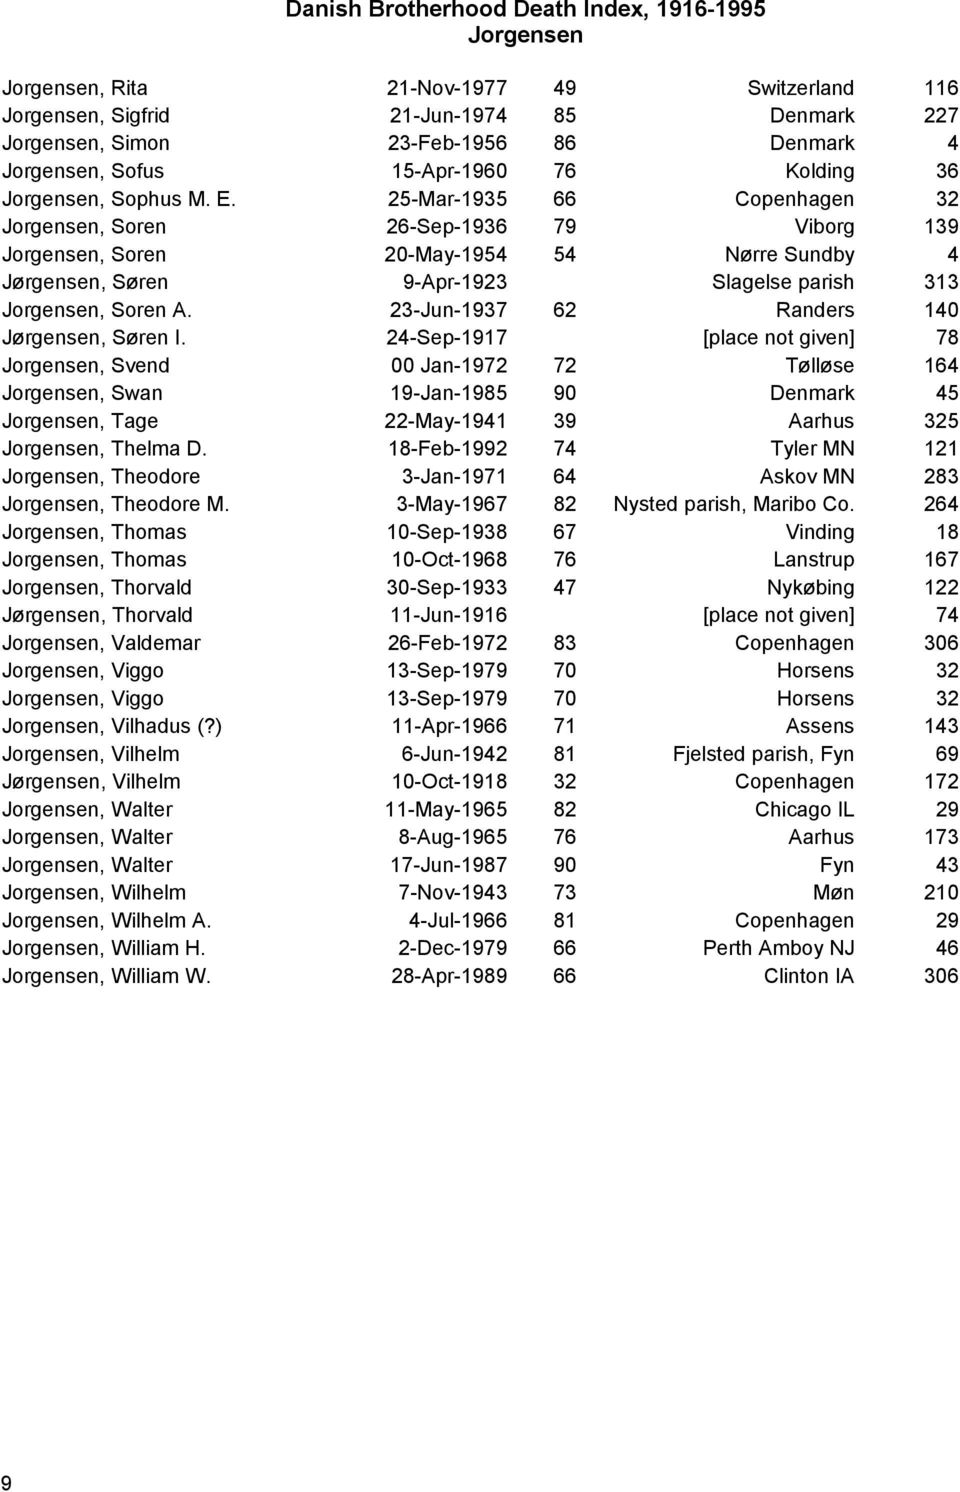 Danish Brotherhood Death Index, Jorgensen Death Date Age Birthplace Lodge # - PDF Descargar libre